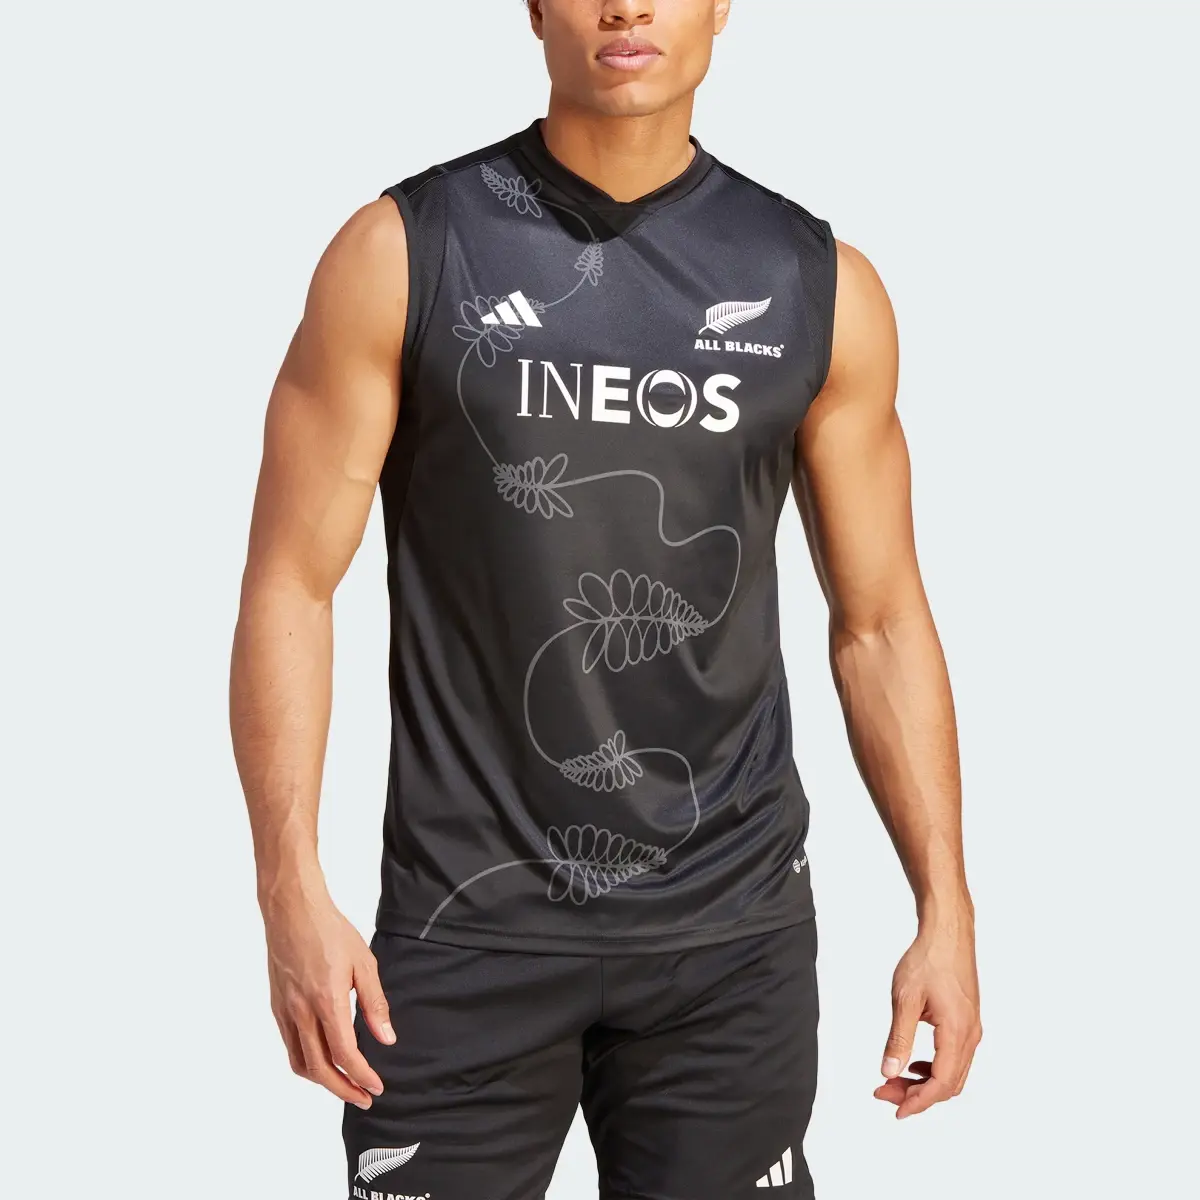 Adidas Camiseta sin mangas All Blacks Rugby Performance. 1